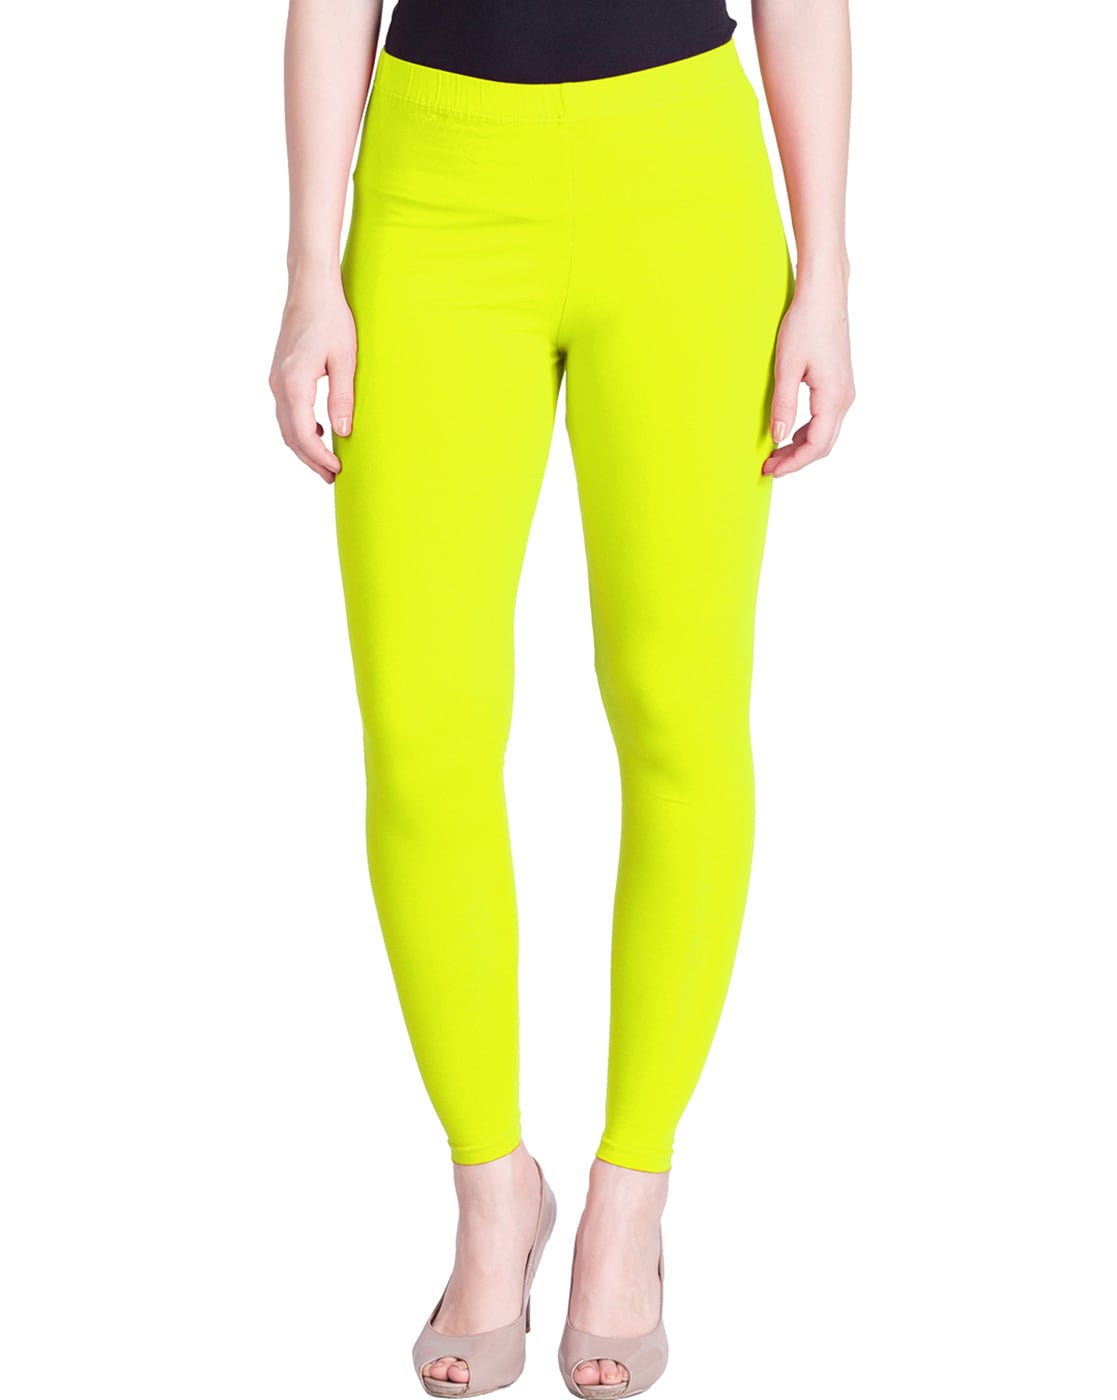 CTOITLKF Workout Leggings, Yellow Lemon Yoga Pants, High Waist Gym Leggings  with Pockets for Women at Amazon Women's Clothing store